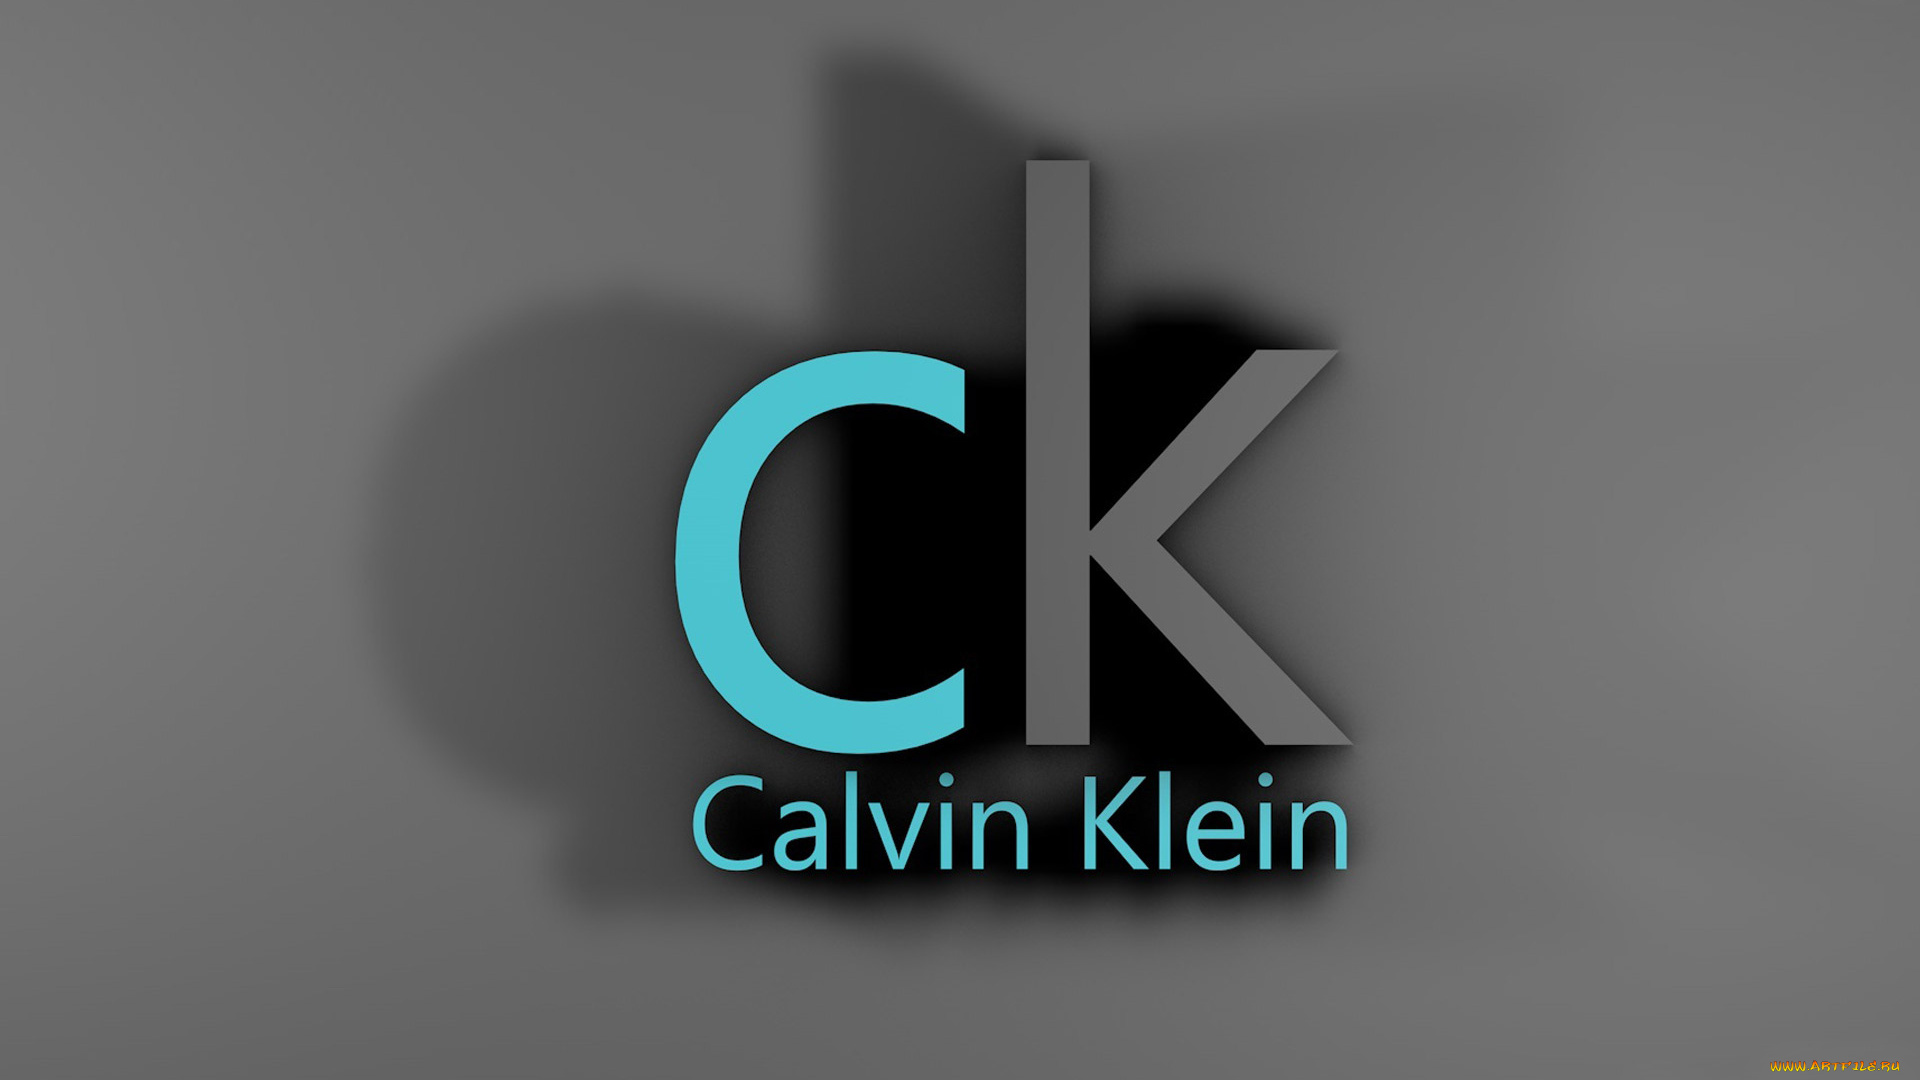 calvin, klein, бренды, аксессуары, одежда, кельвин, кляйн, brands, calvin, klein, logo, логотип, модный, бренд